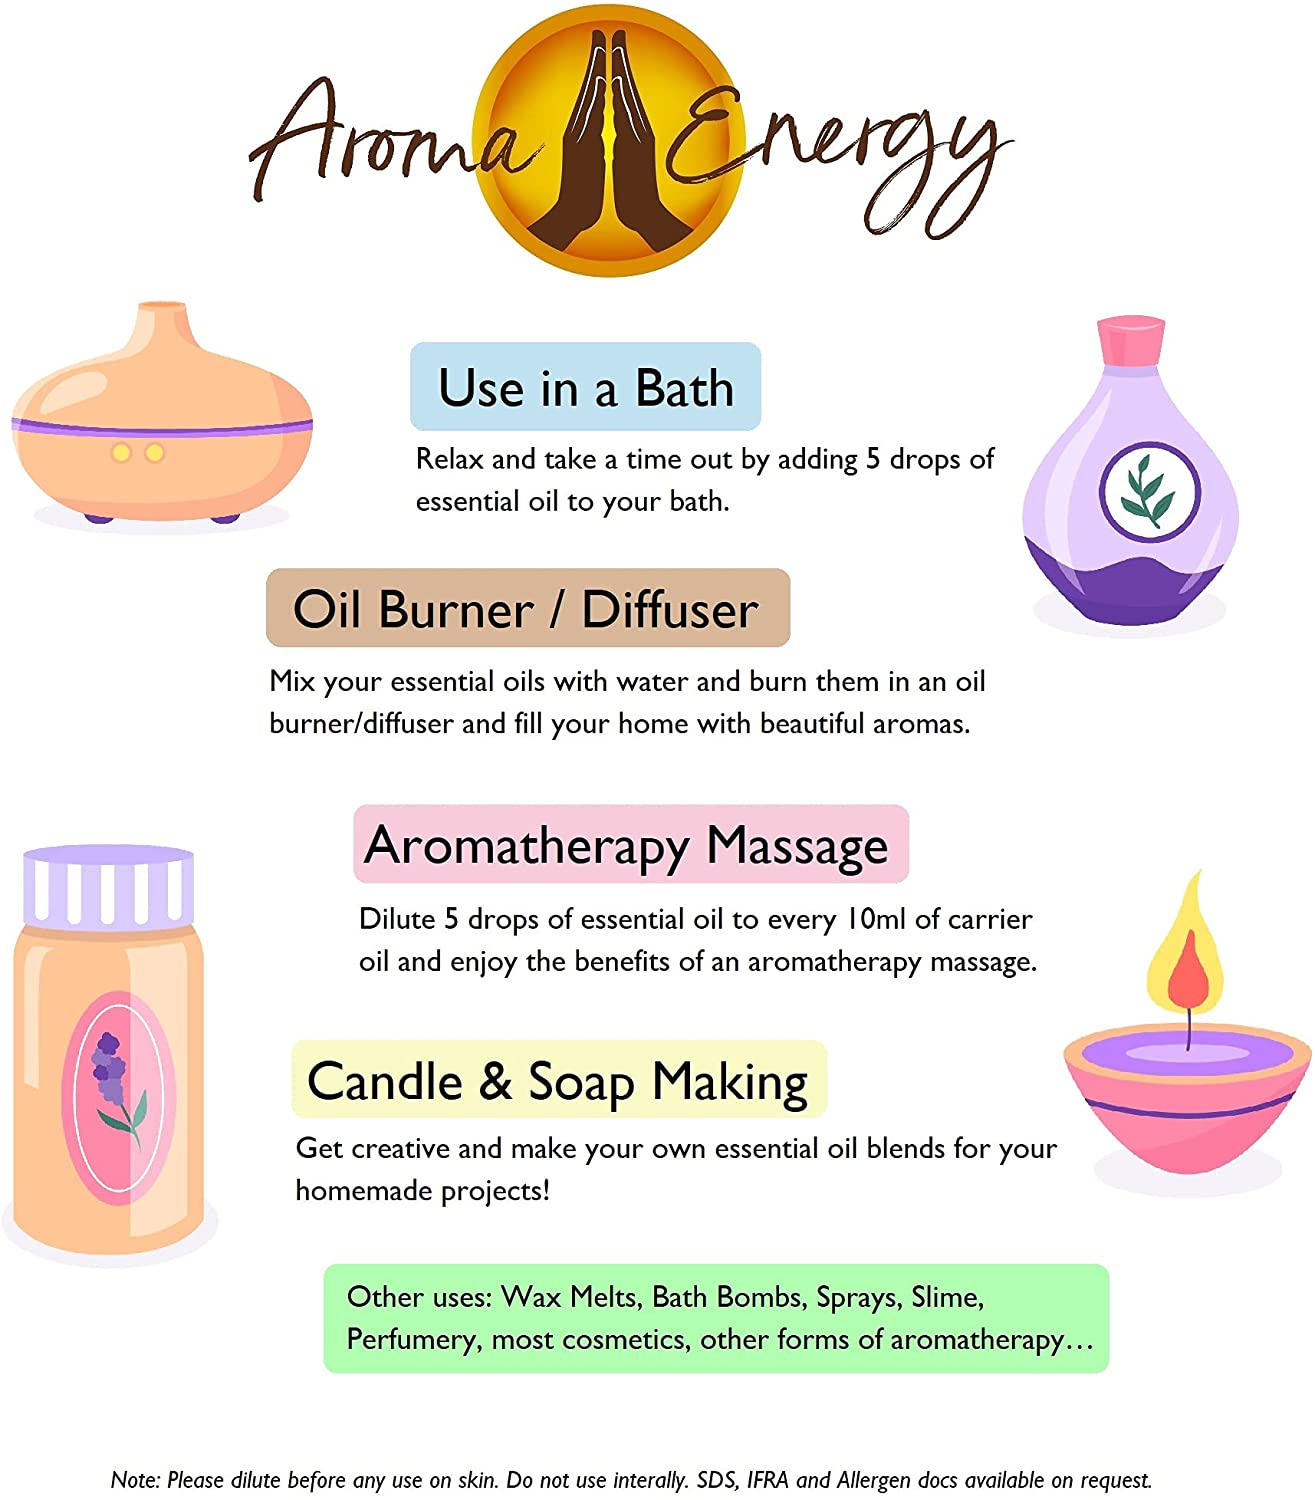 Sage Pure Essential Oil - Aroma Energy